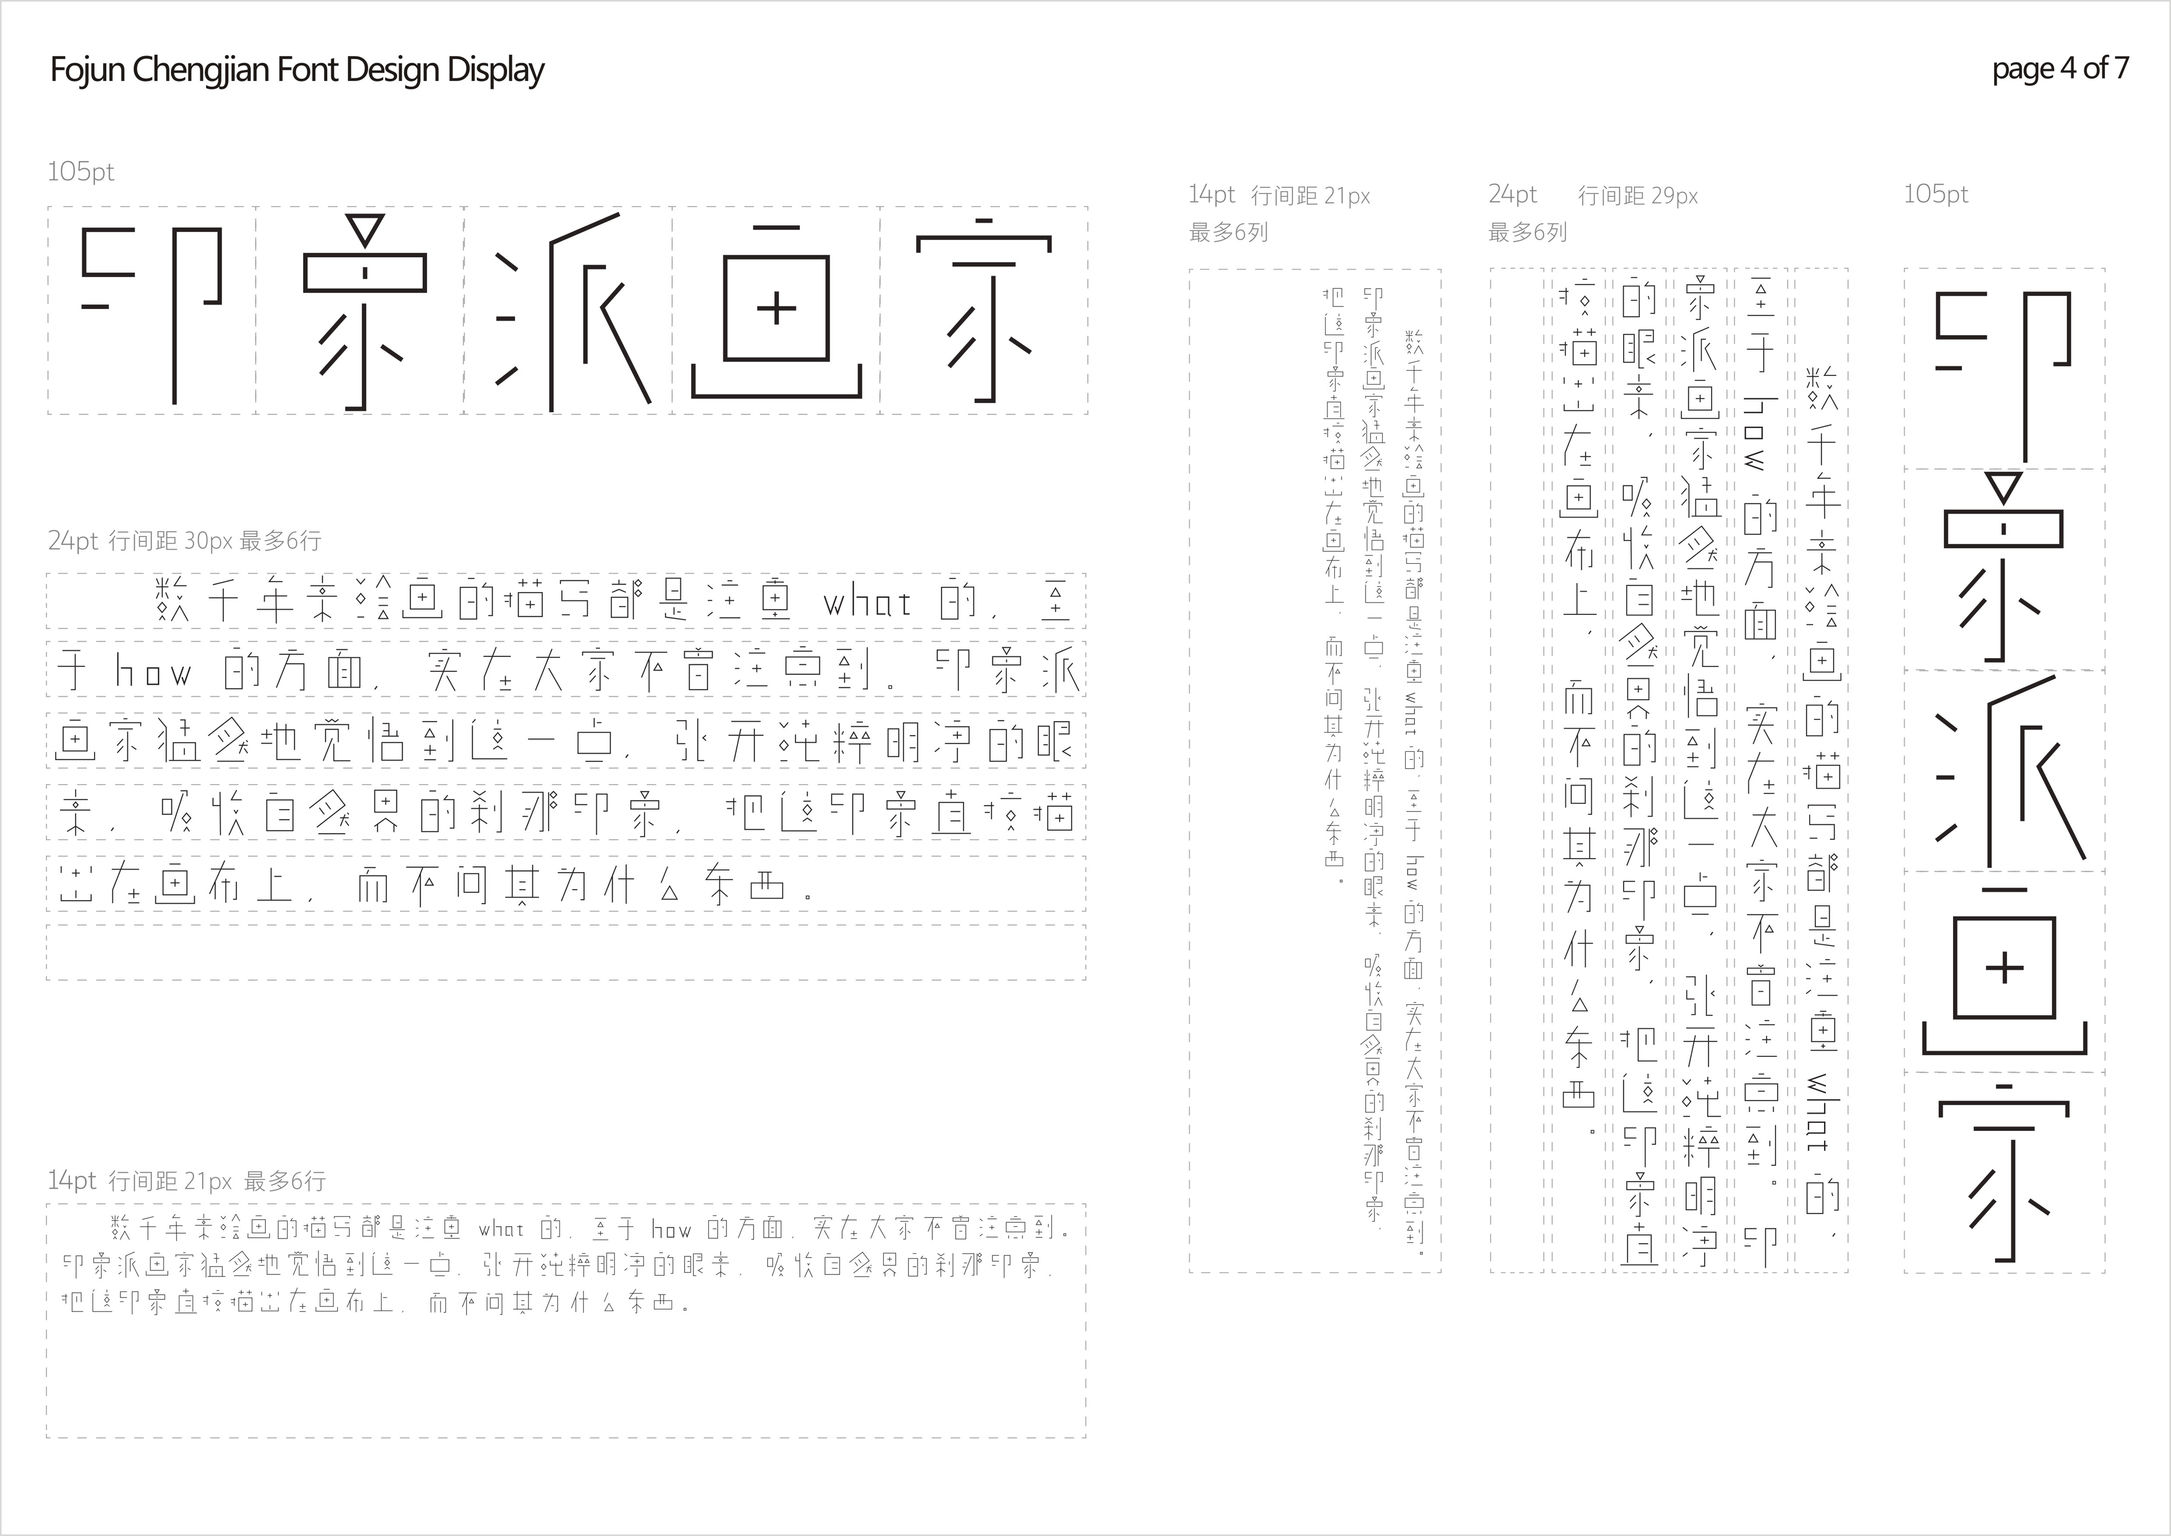 Fojun Chengjian Font Design